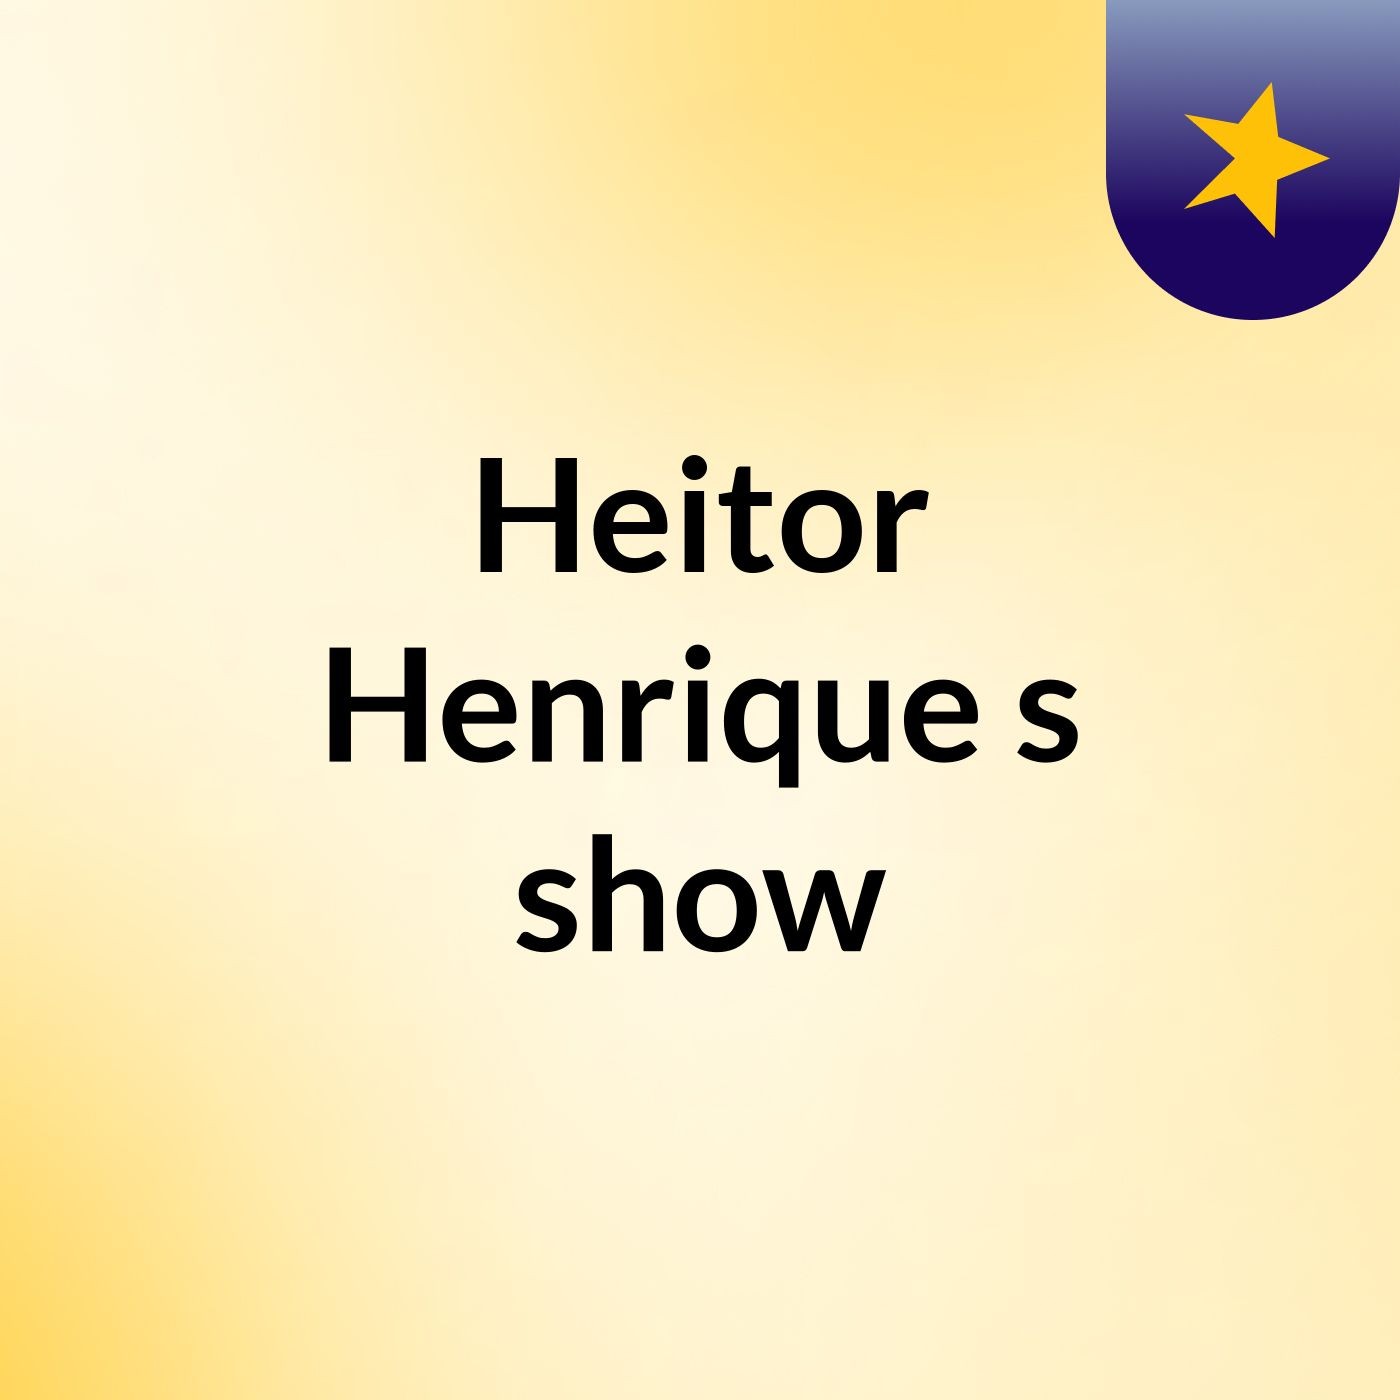 Heitor Henrique's show